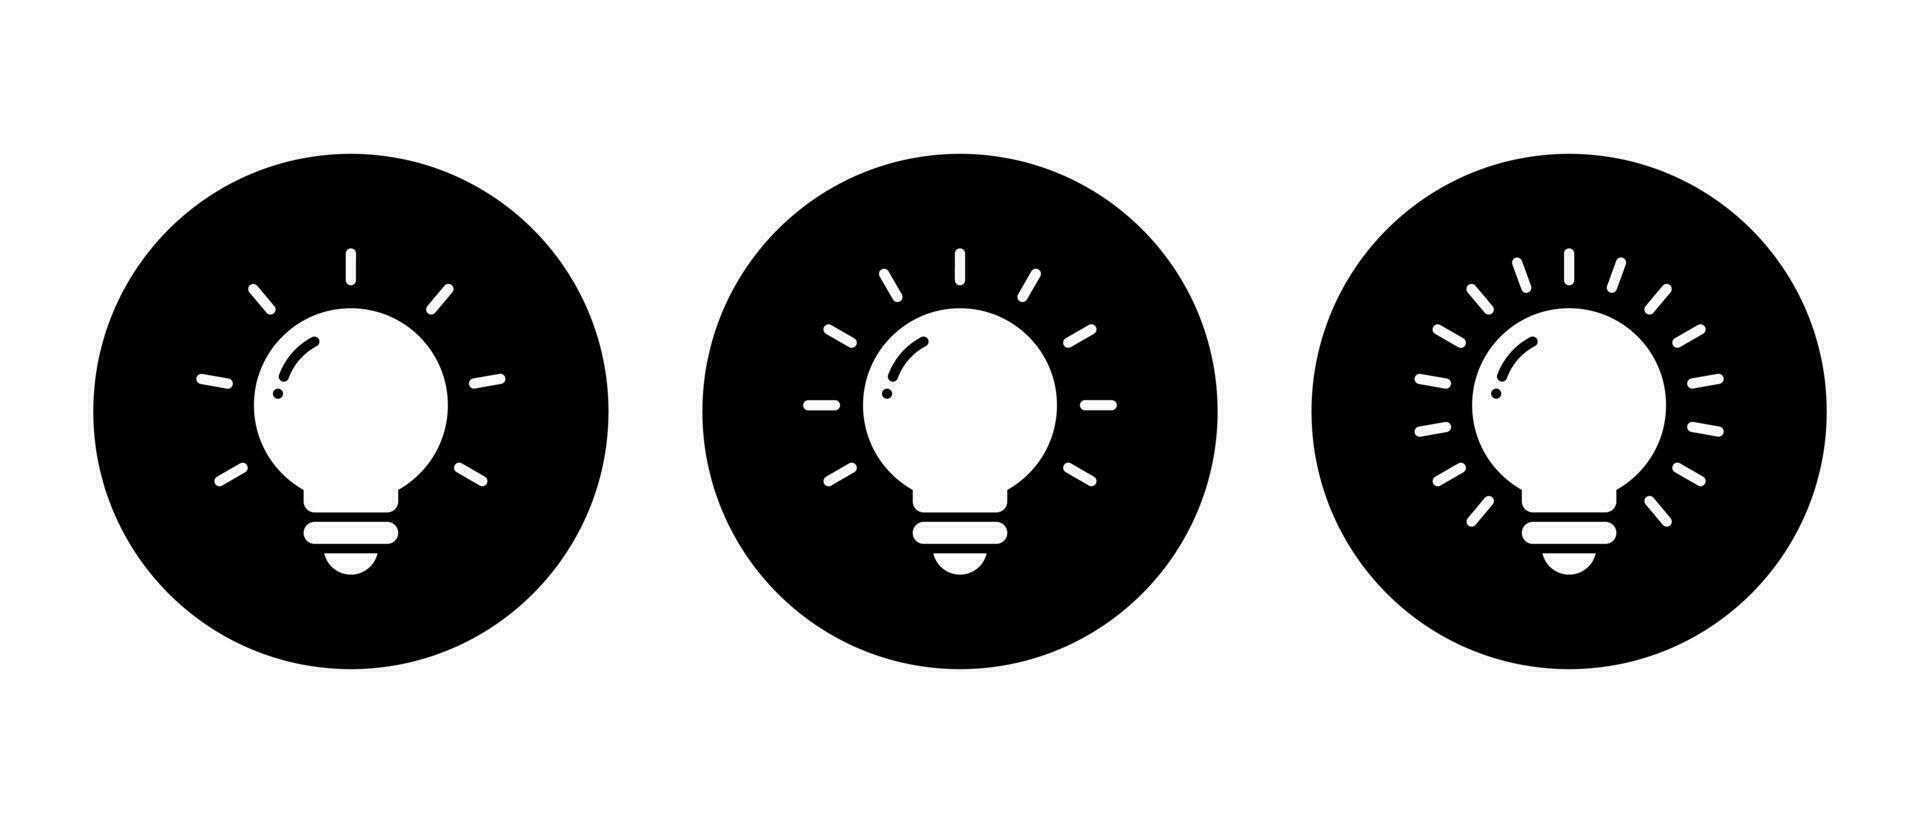 Bulb icon vector. Idea, lamp sign symbol vector